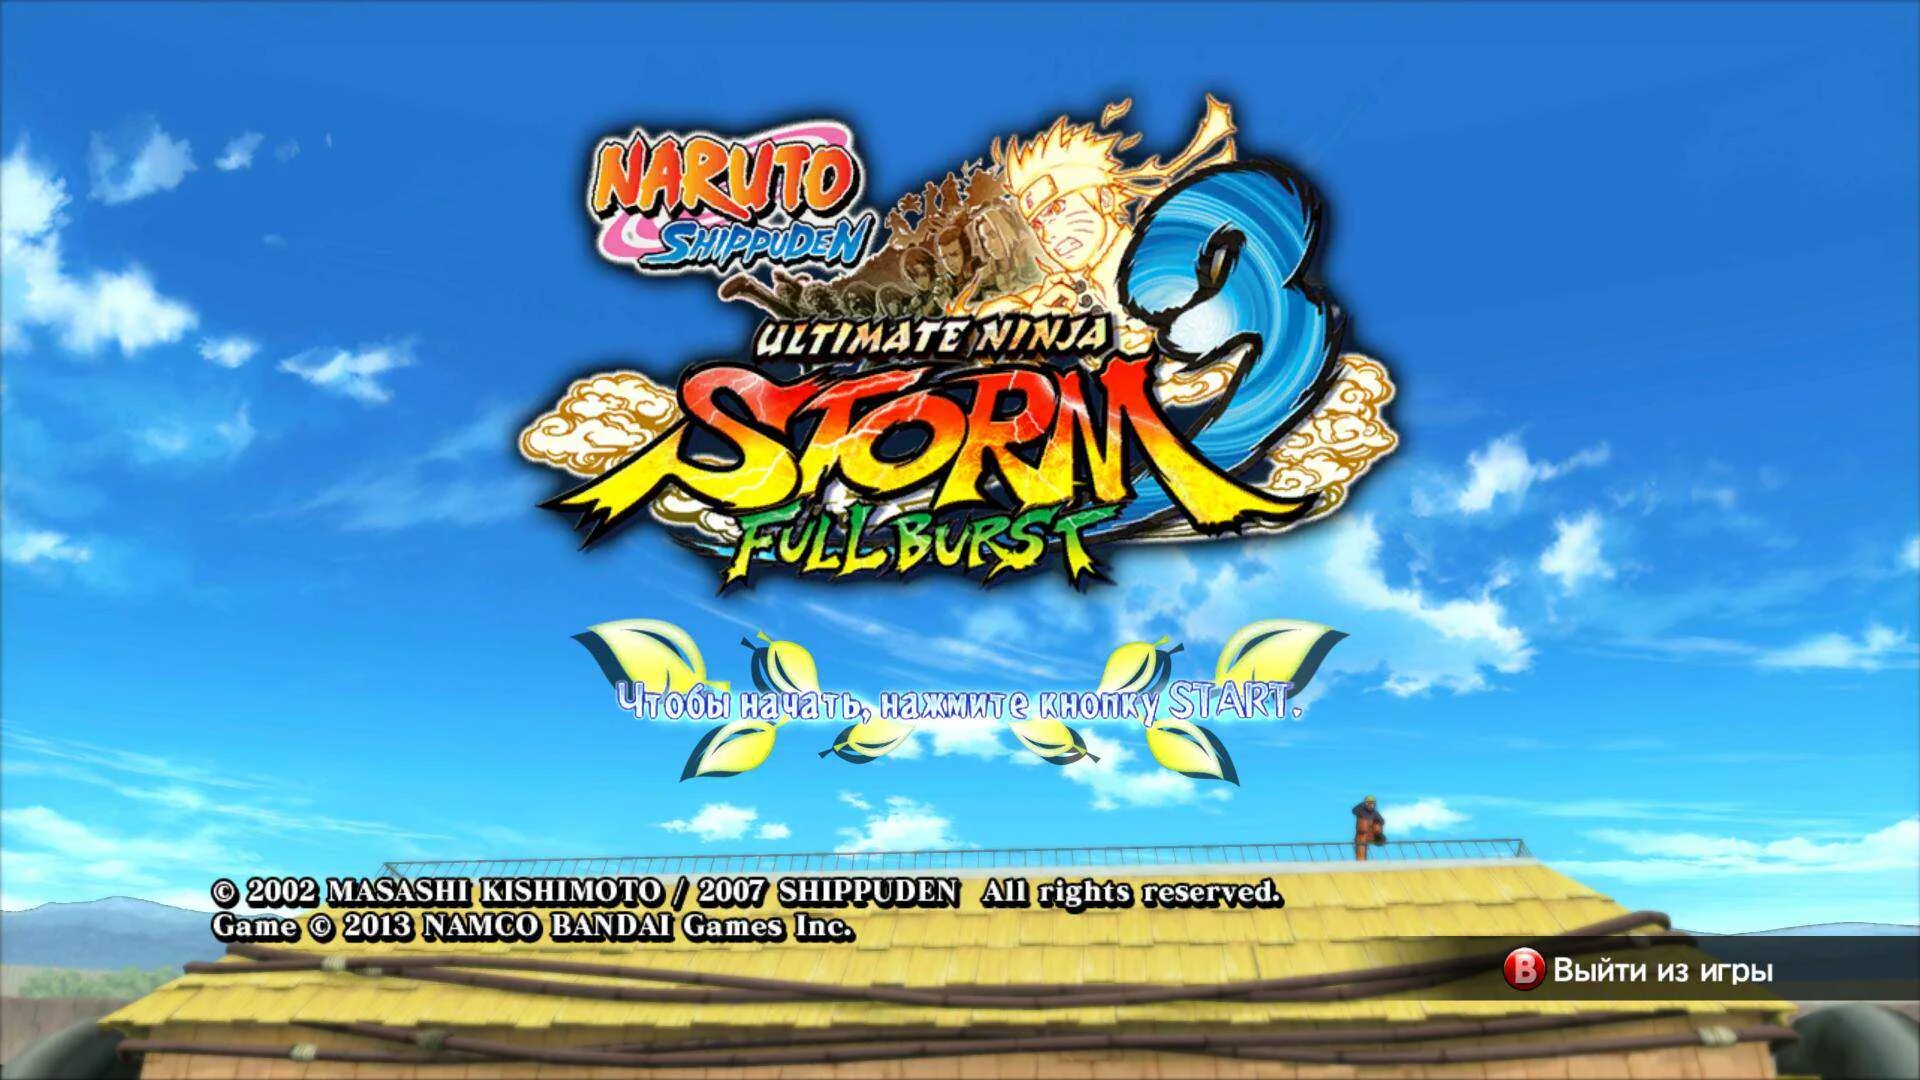 Naruto Ultimate Ninja Storm 3. Naruto Storm 3 обложка. Наруто шторм 3 Full Burst. Naruto: Ultimate Ninja Storm (2017).